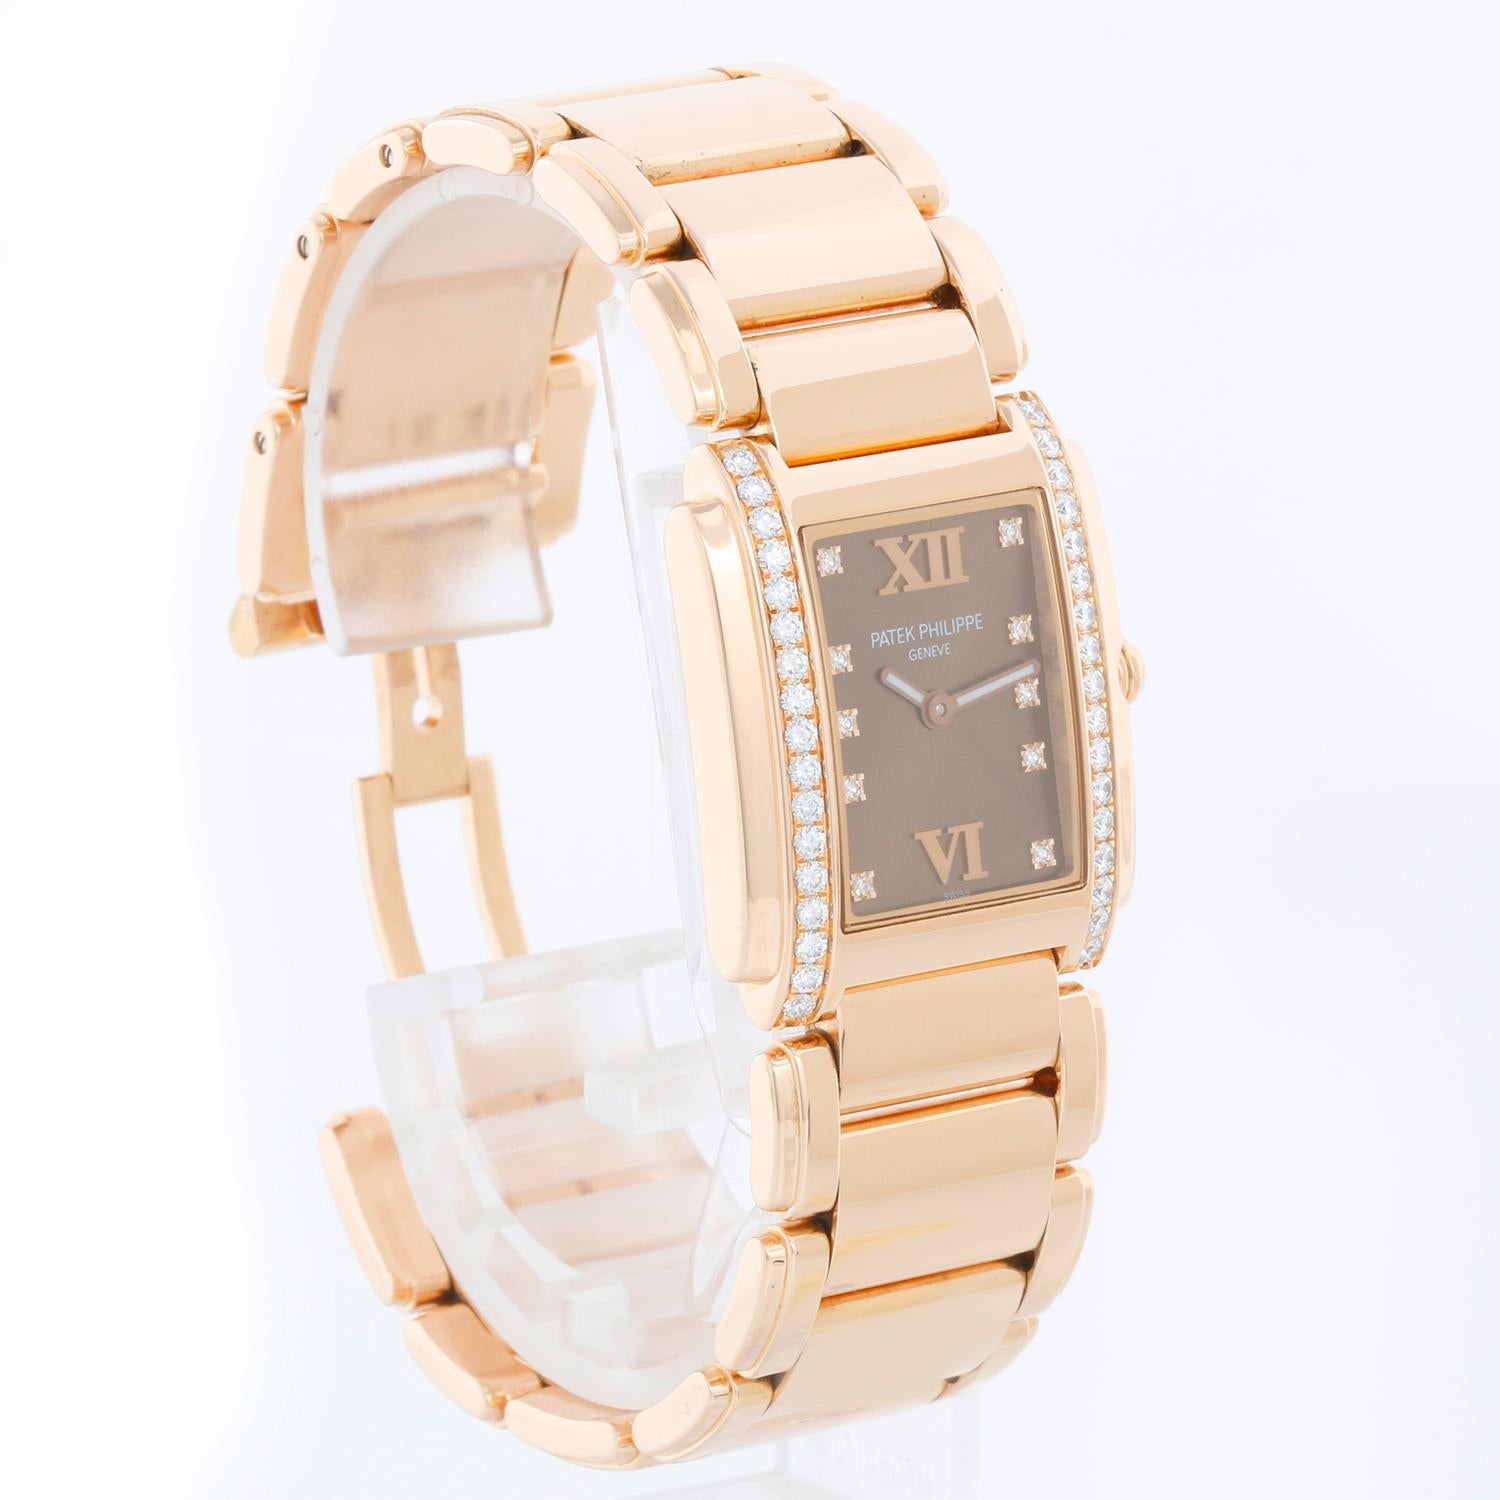 Patek Philippe Twenty-4 Ladies 18k Rose Gold & Diamond Watch 4910/11R In Excellent Condition For Sale In Dallas, TX